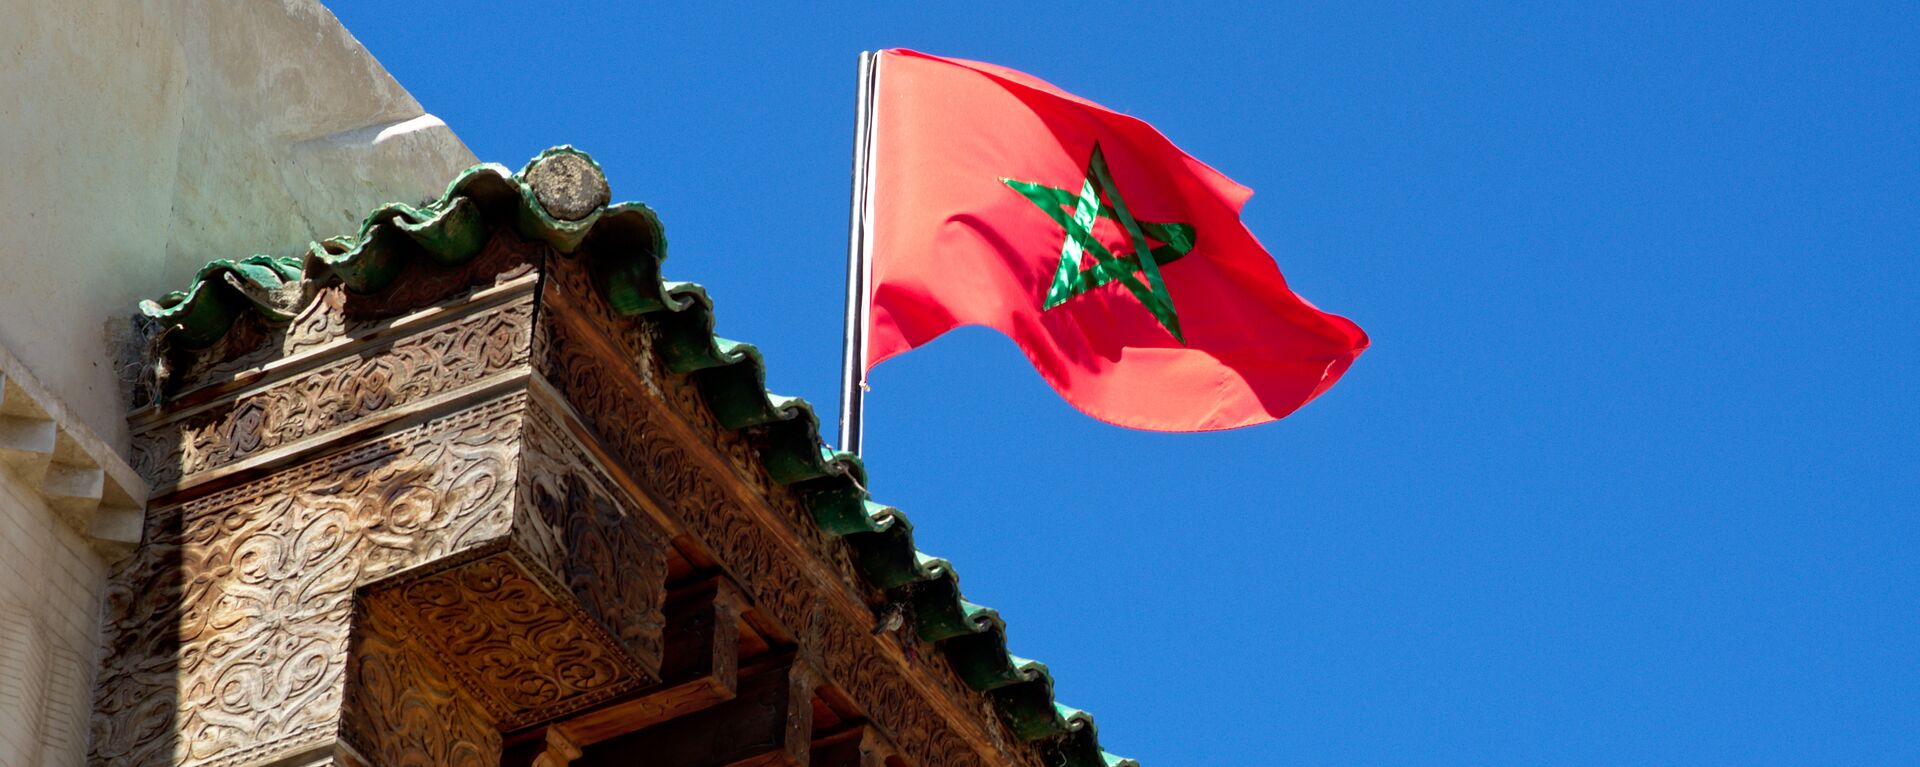 La bandera de Marruecos - Sputnik Mundo, 1920, 25.01.2021